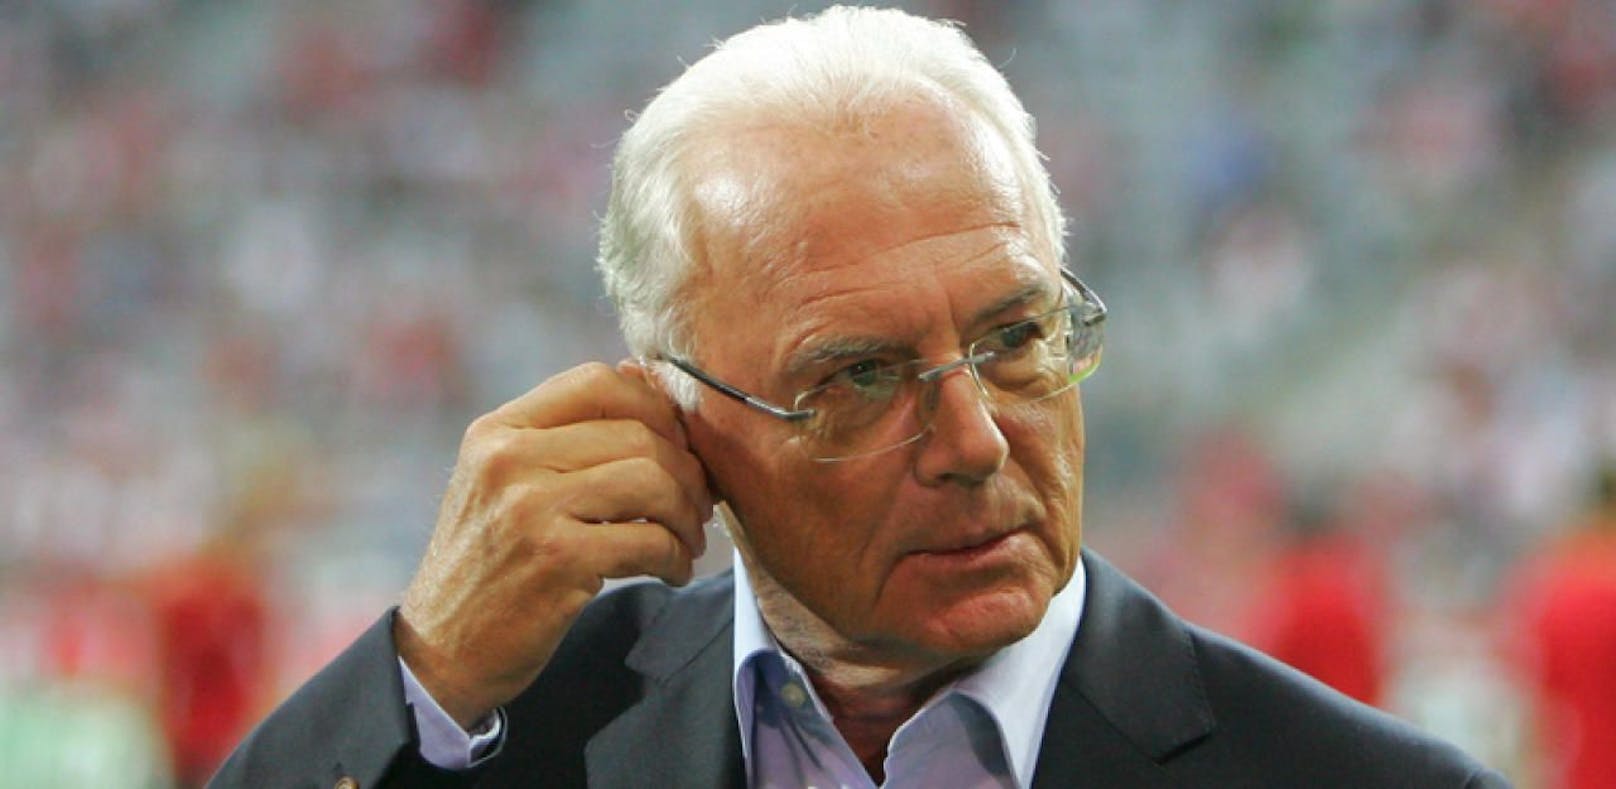 Herz-Operation bei "Kaiser" Beckenbauer